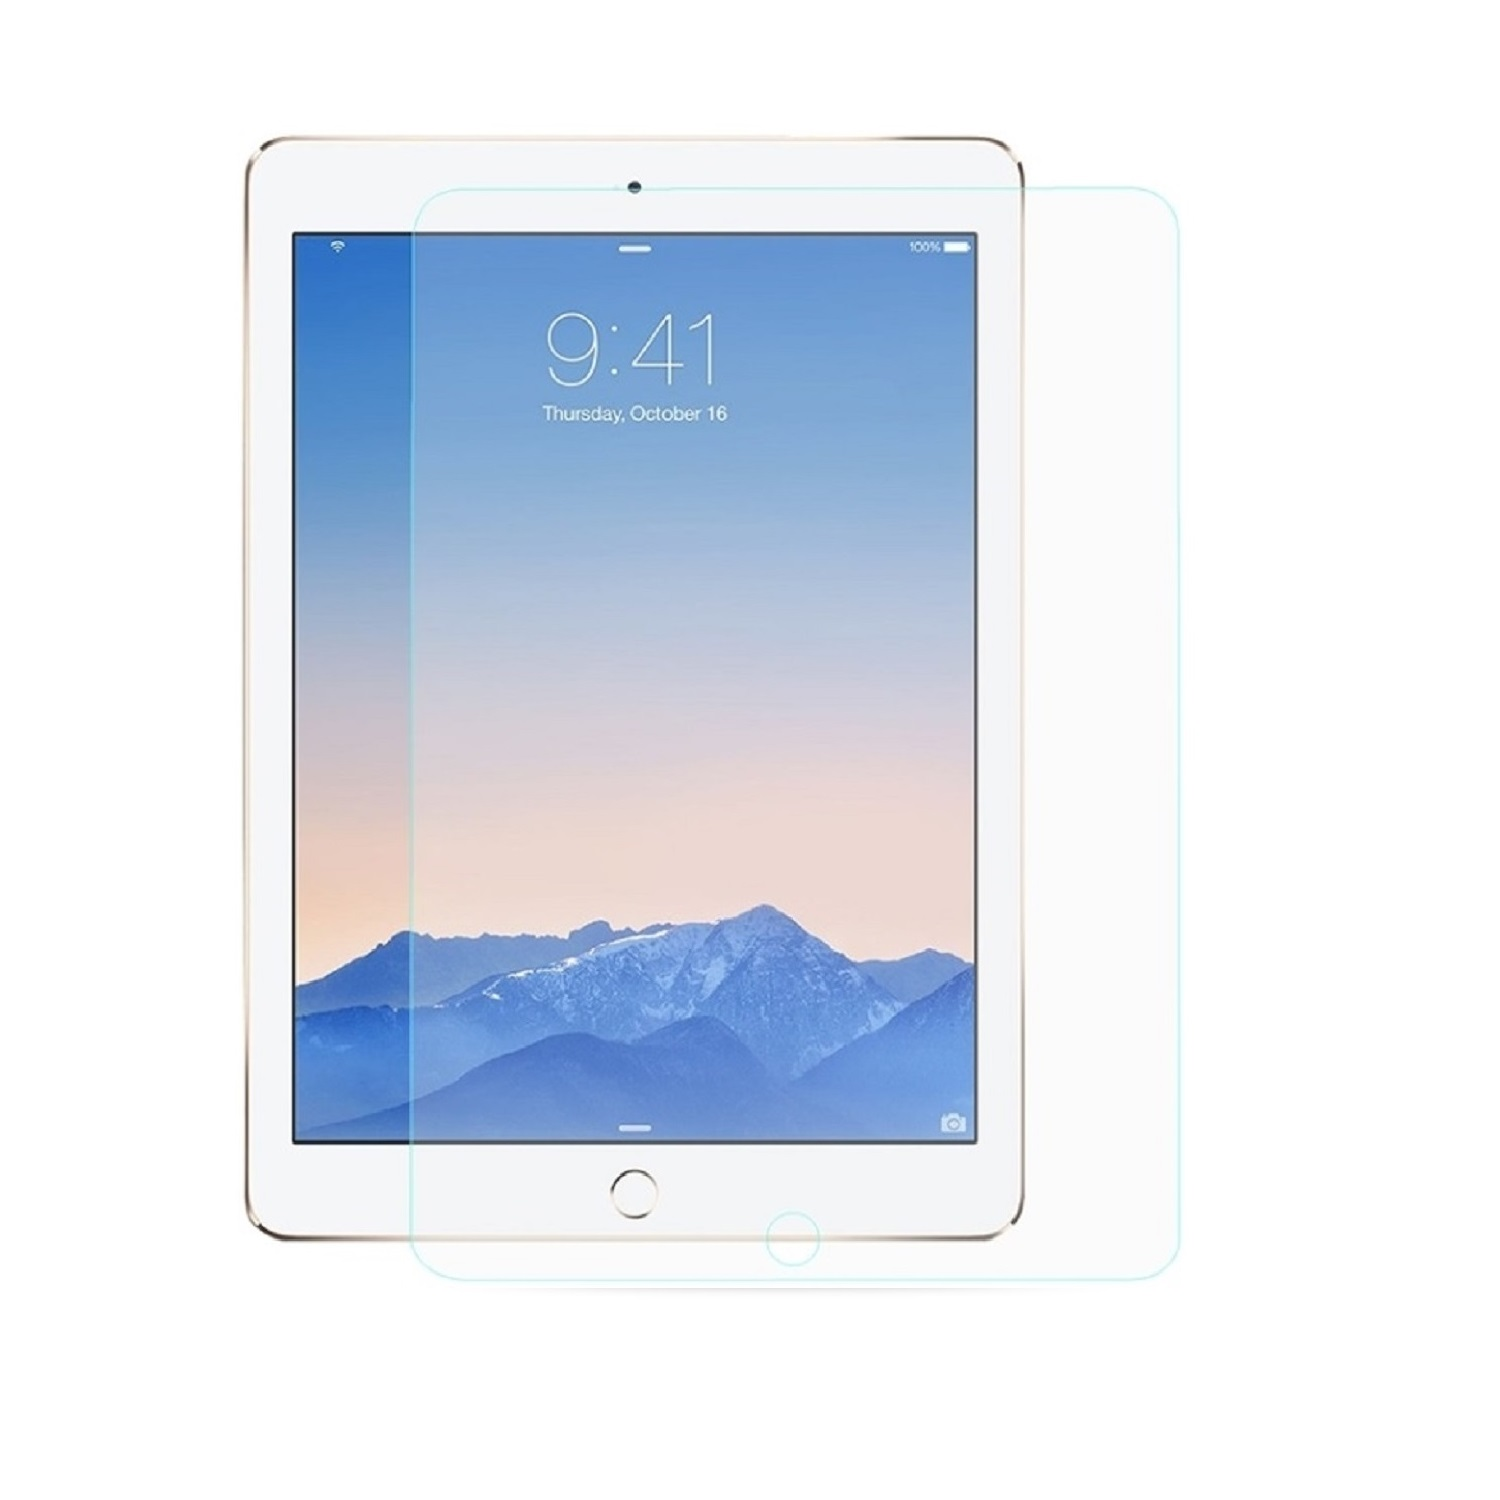 Apple 9.7) PROTECTORKING 4x KLAR Air Schutzfolie HD iPad Displayschutzfolie(für